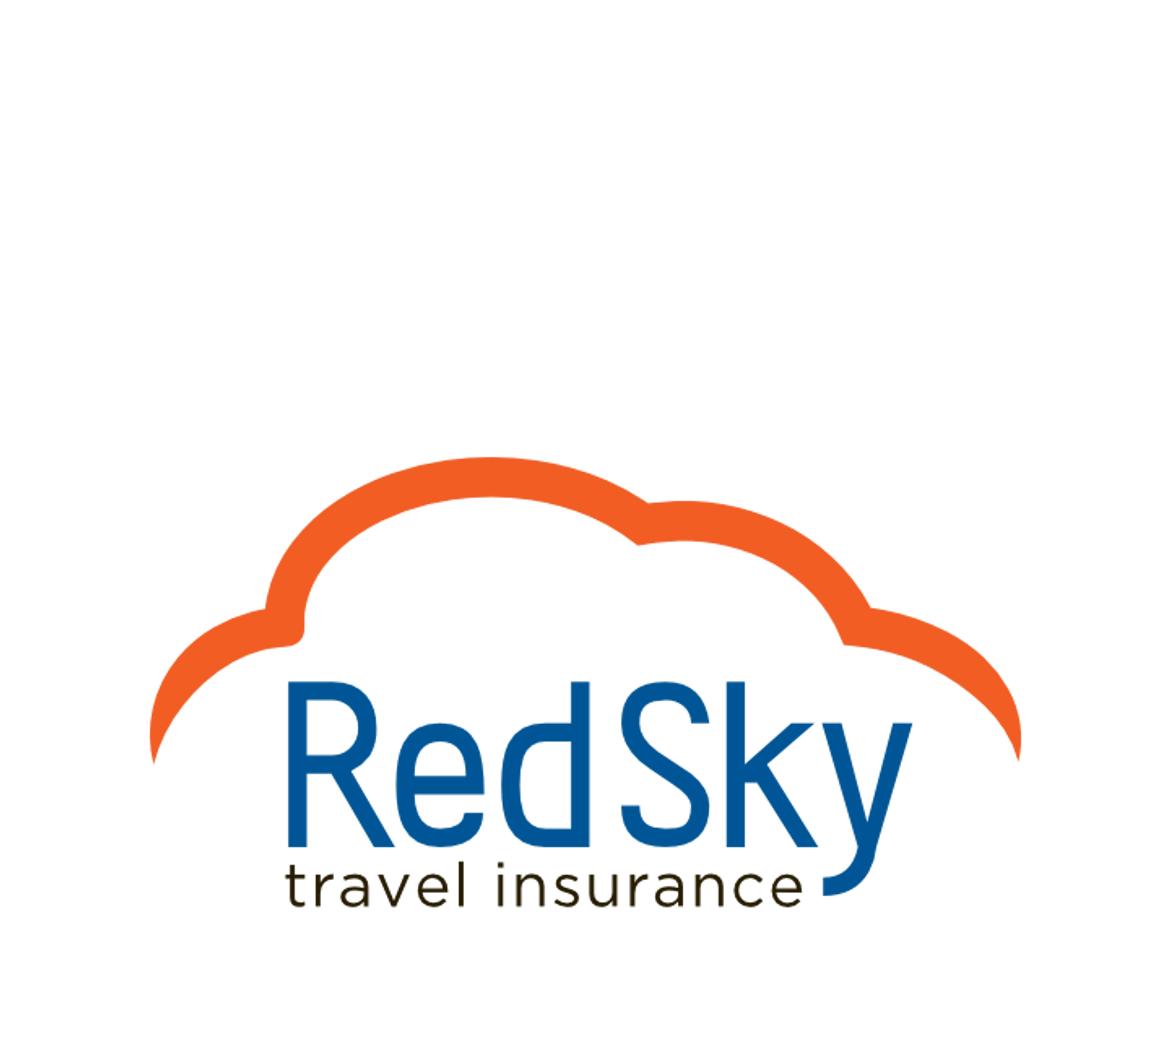 RedSky Travel Insurance logo